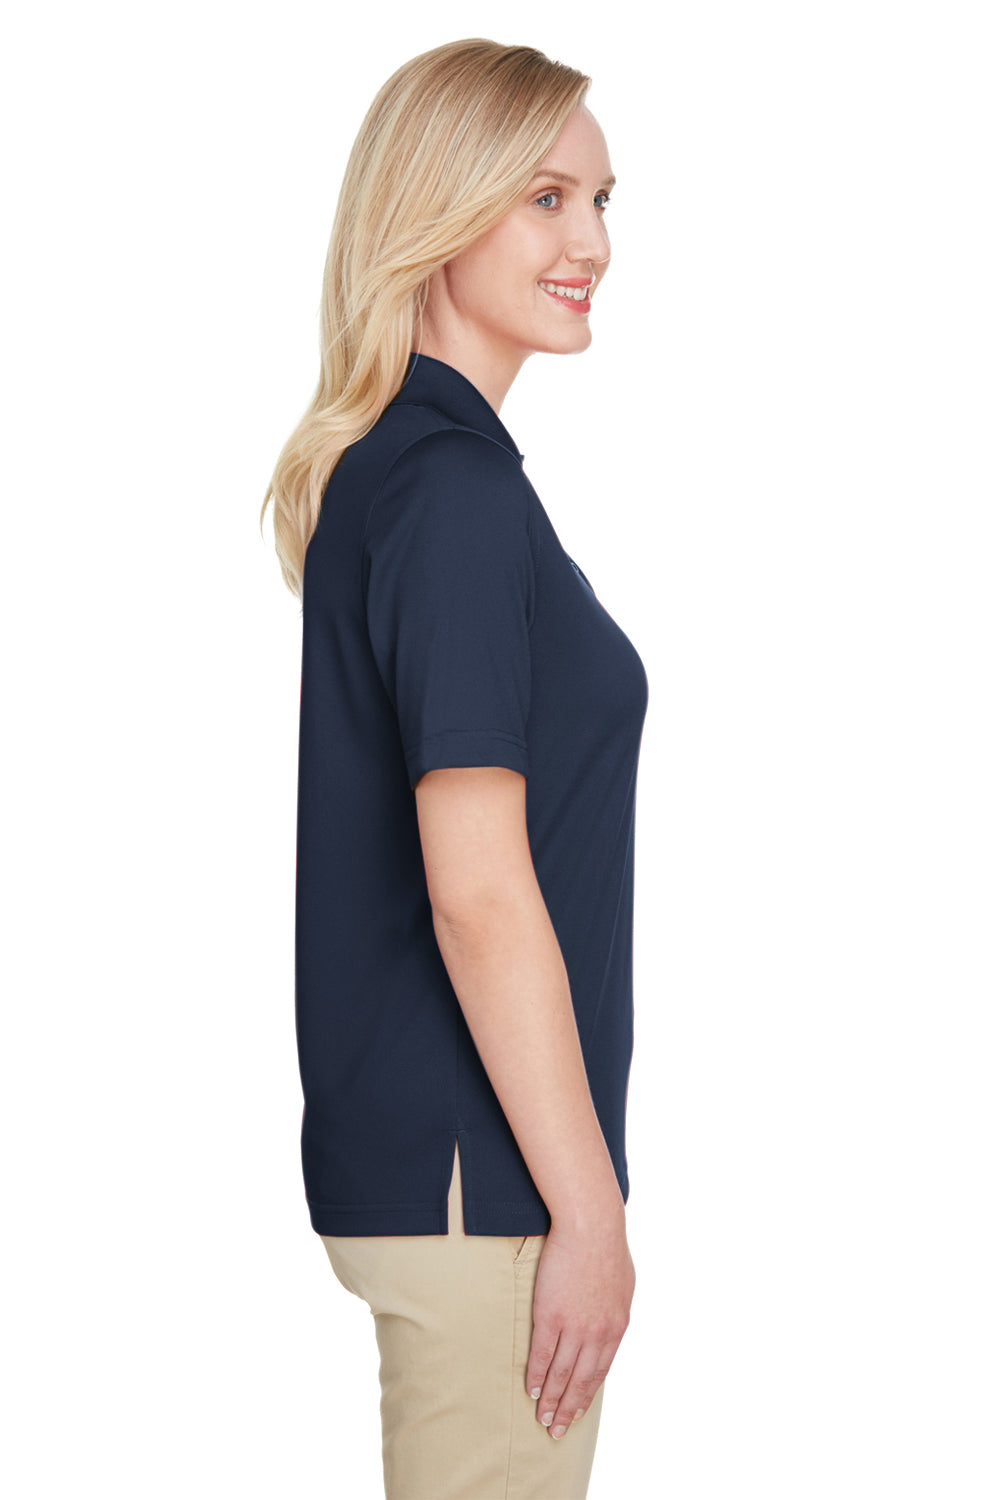 Harriton M348W Womens Advantage Performance Moisture Wicking Short Sleeve Polo Shirt Navy Blue Side